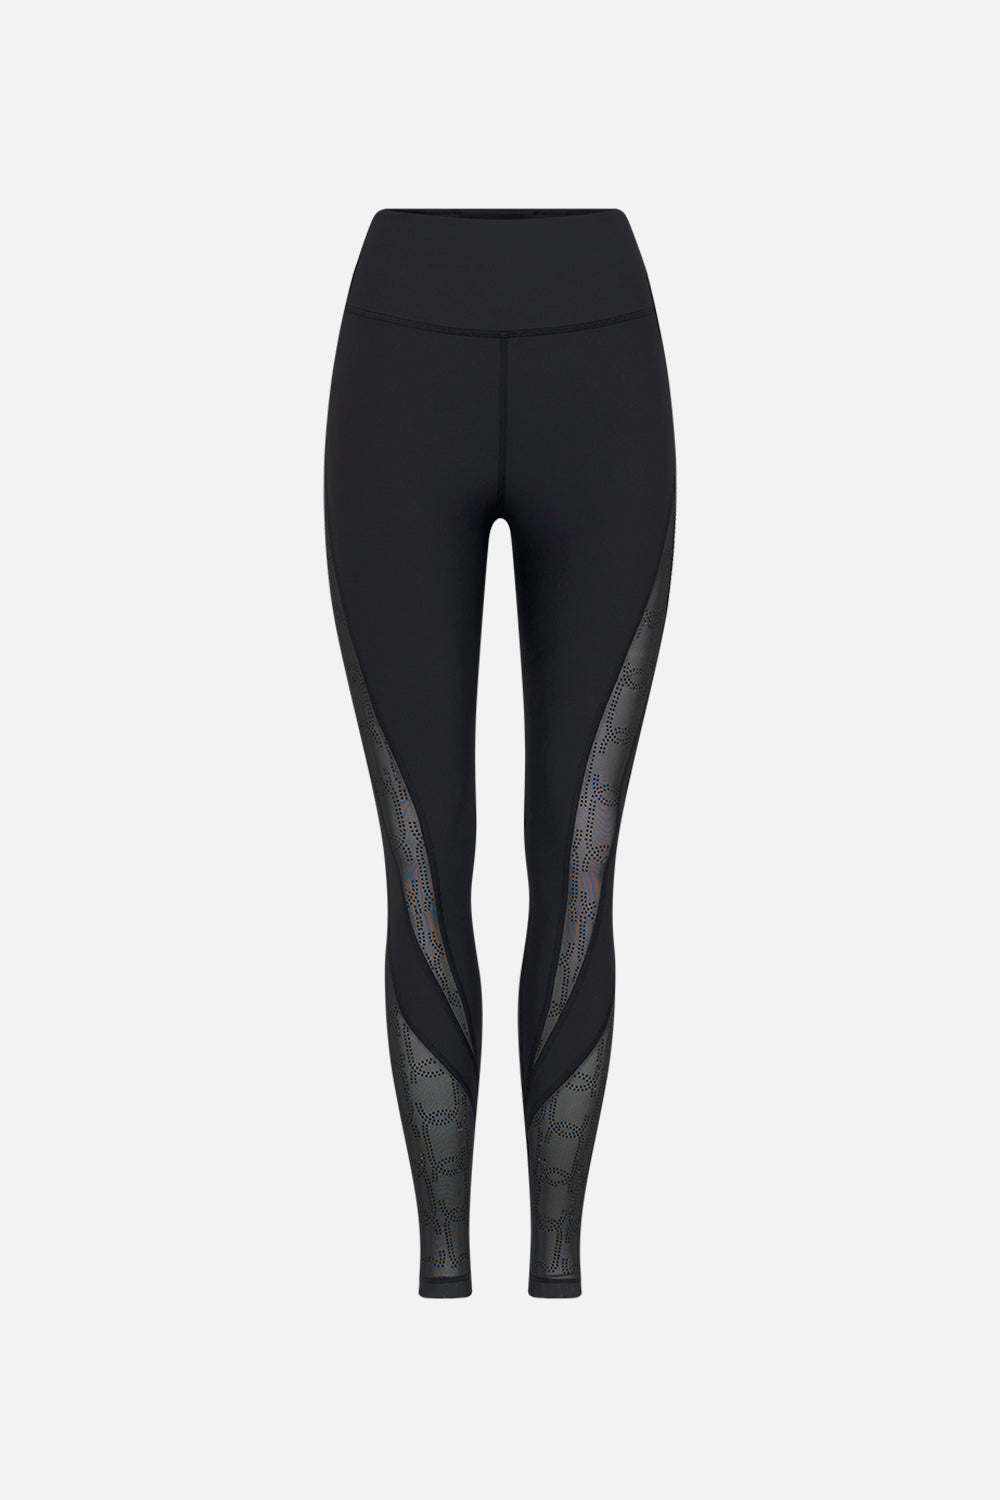 CAMILLA black mesh leggings 